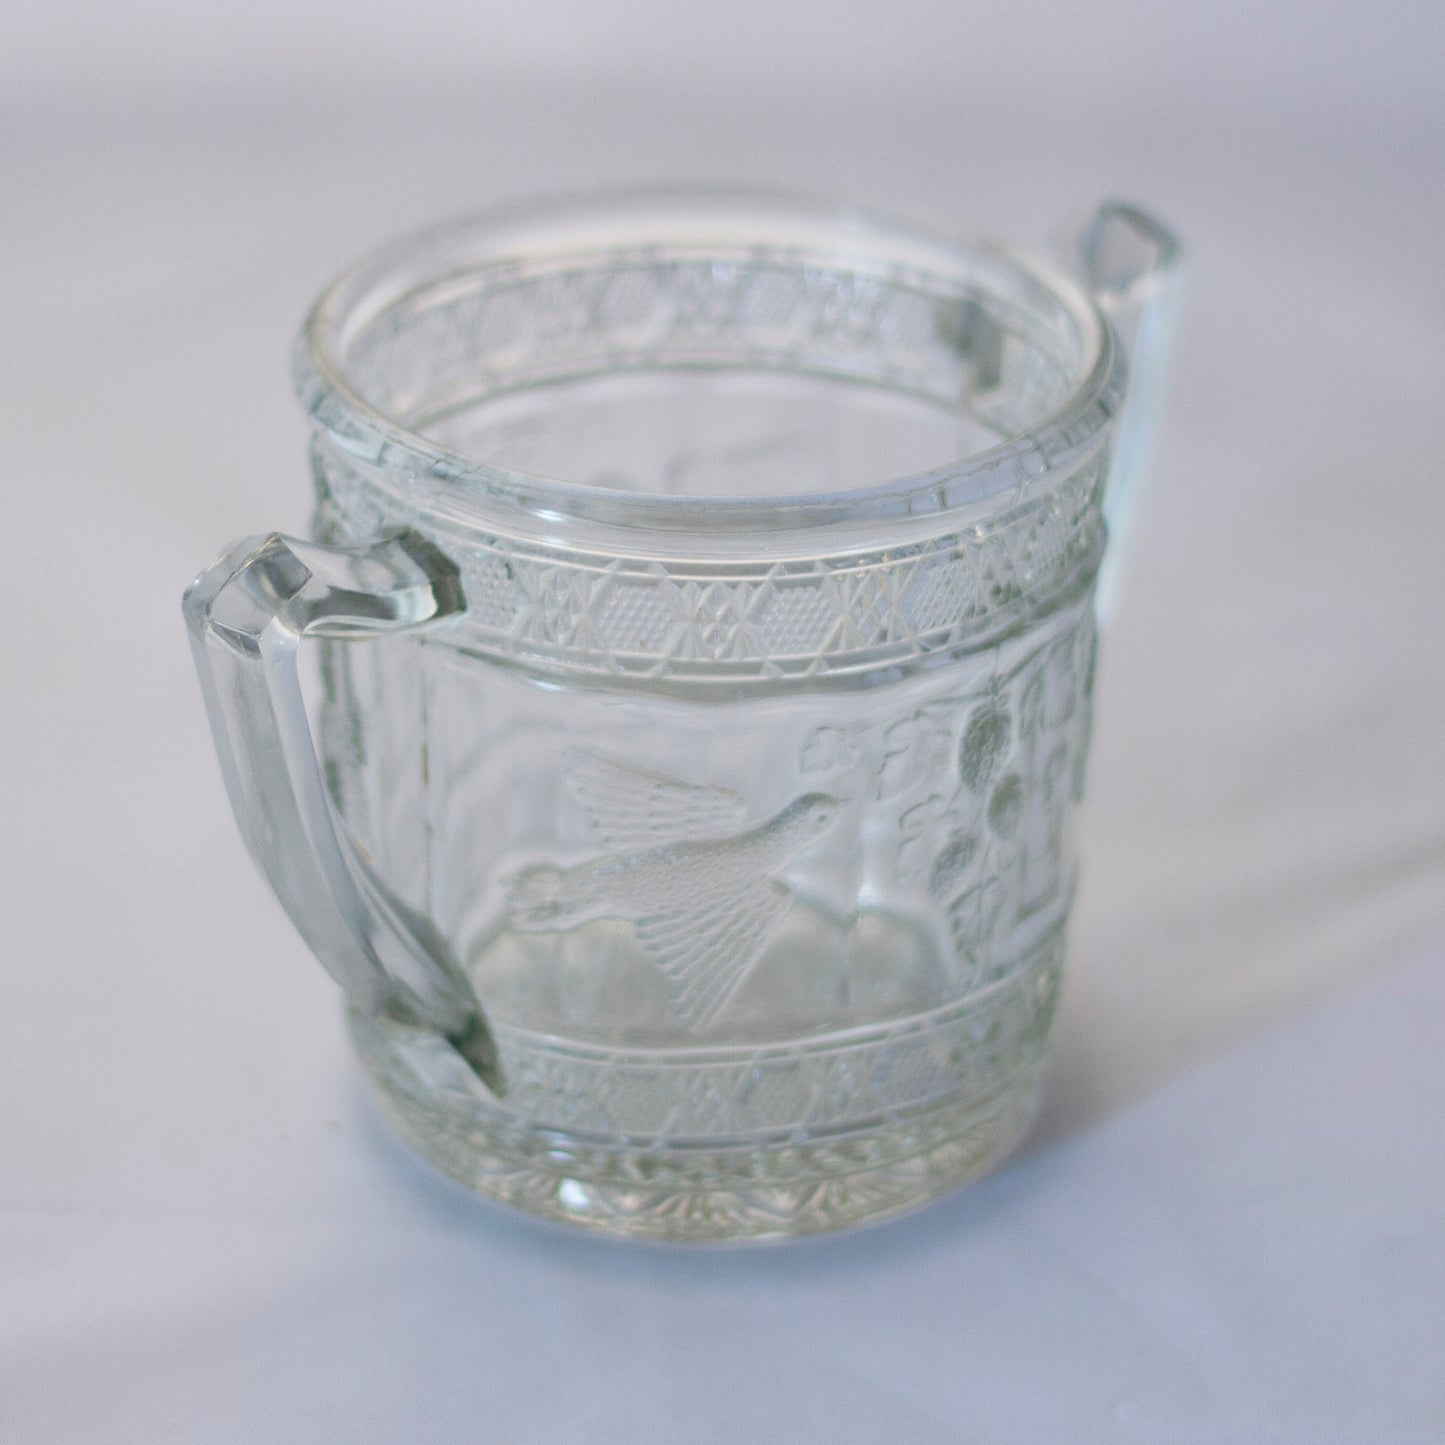 EARLY AMERICAN PATTERN GLASS Open Sugar Bowl Bird & Strawberries Pattern by Indiana Glass Circa 1910